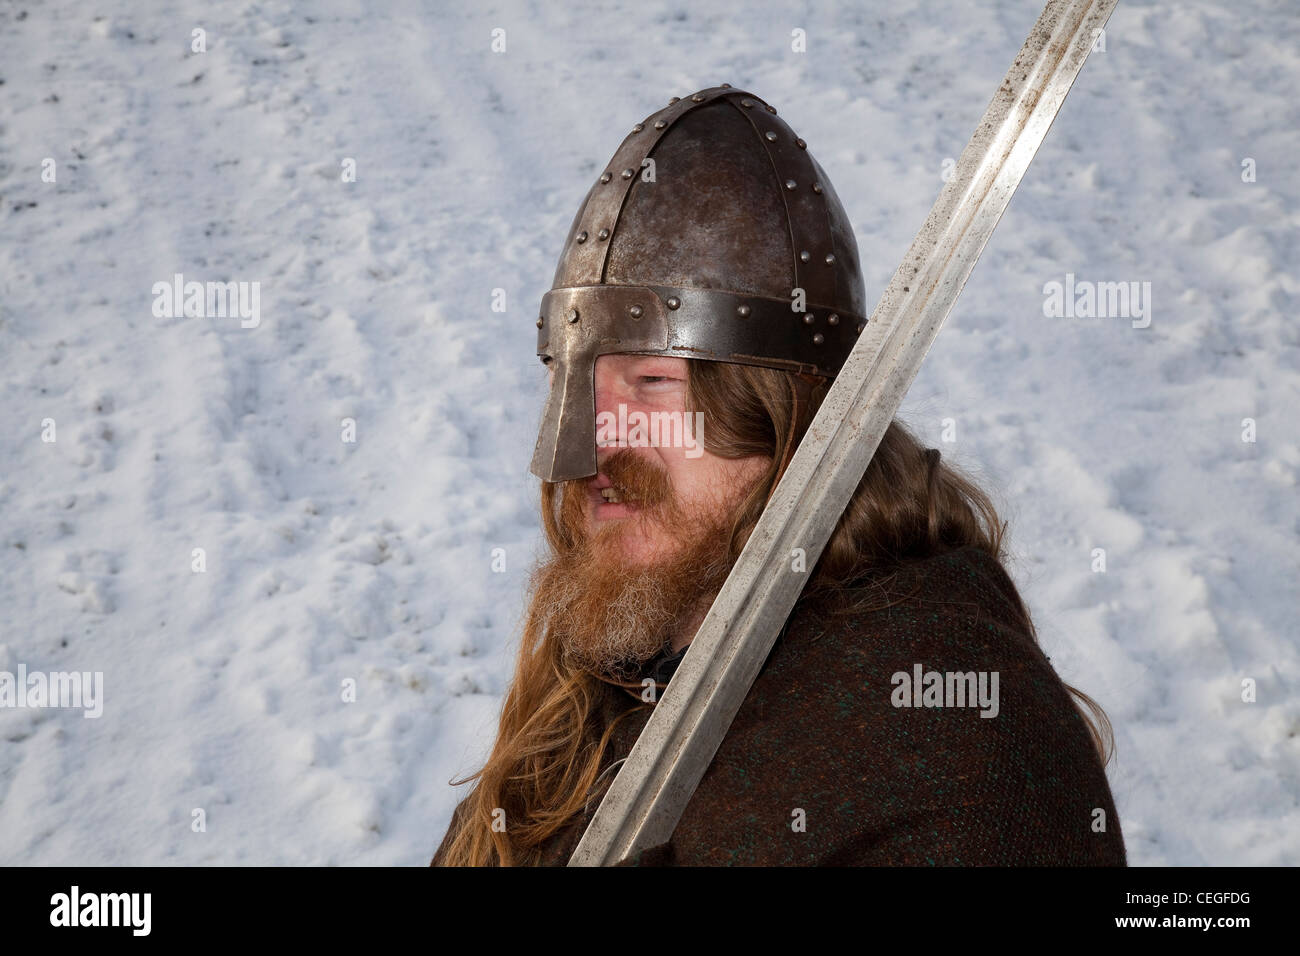 Viking re-enactor, with beard & long hair wearing Helmet and carrying sword at the 27th Annual JORVIK Festival in York, UK Stock Photo